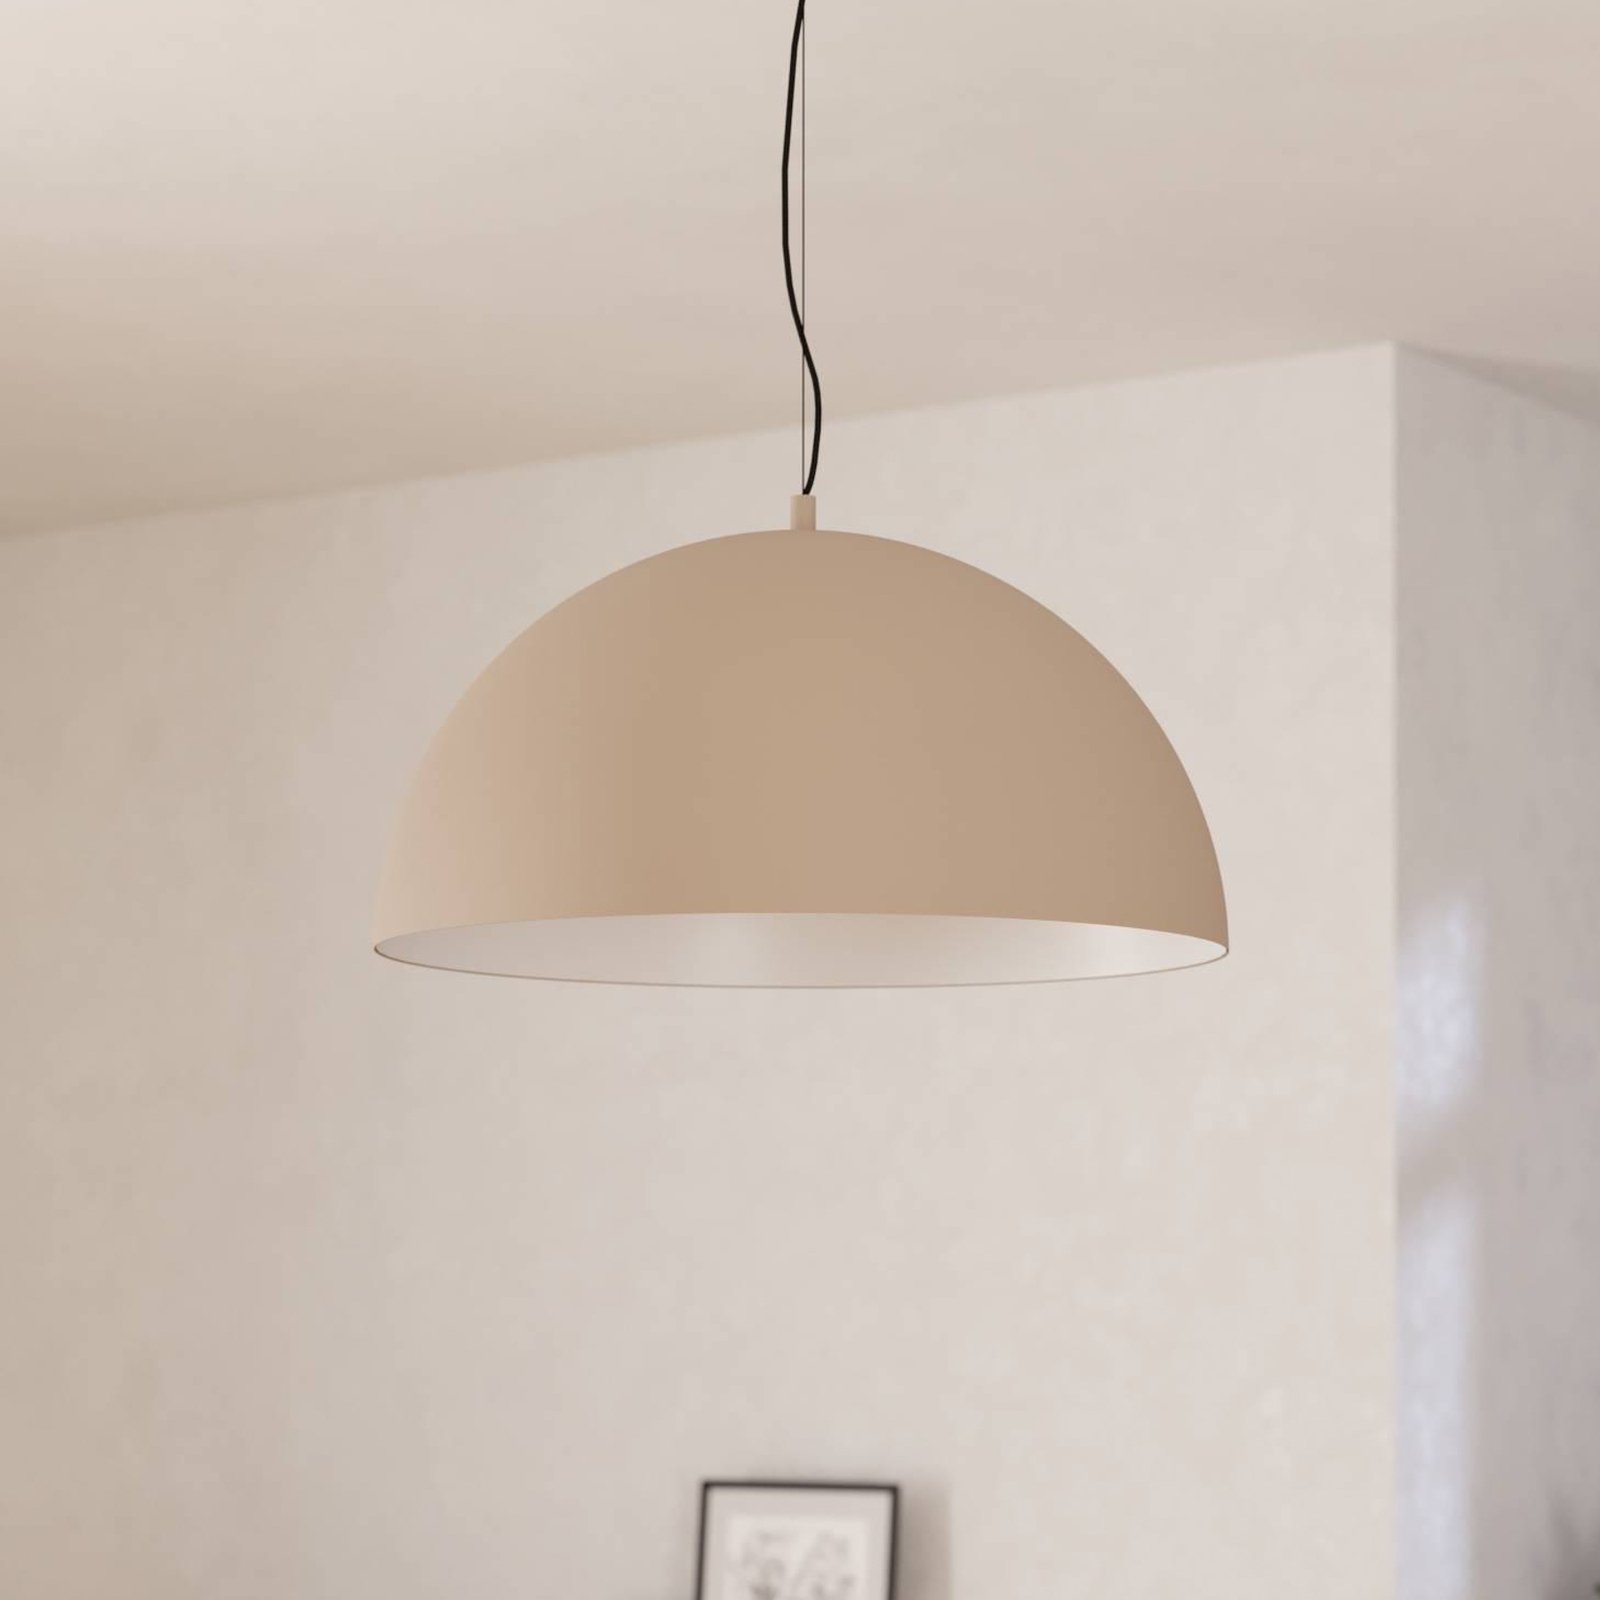 Gaetano 1 hanglamp, Ø 53 cm, zand/crème, staal